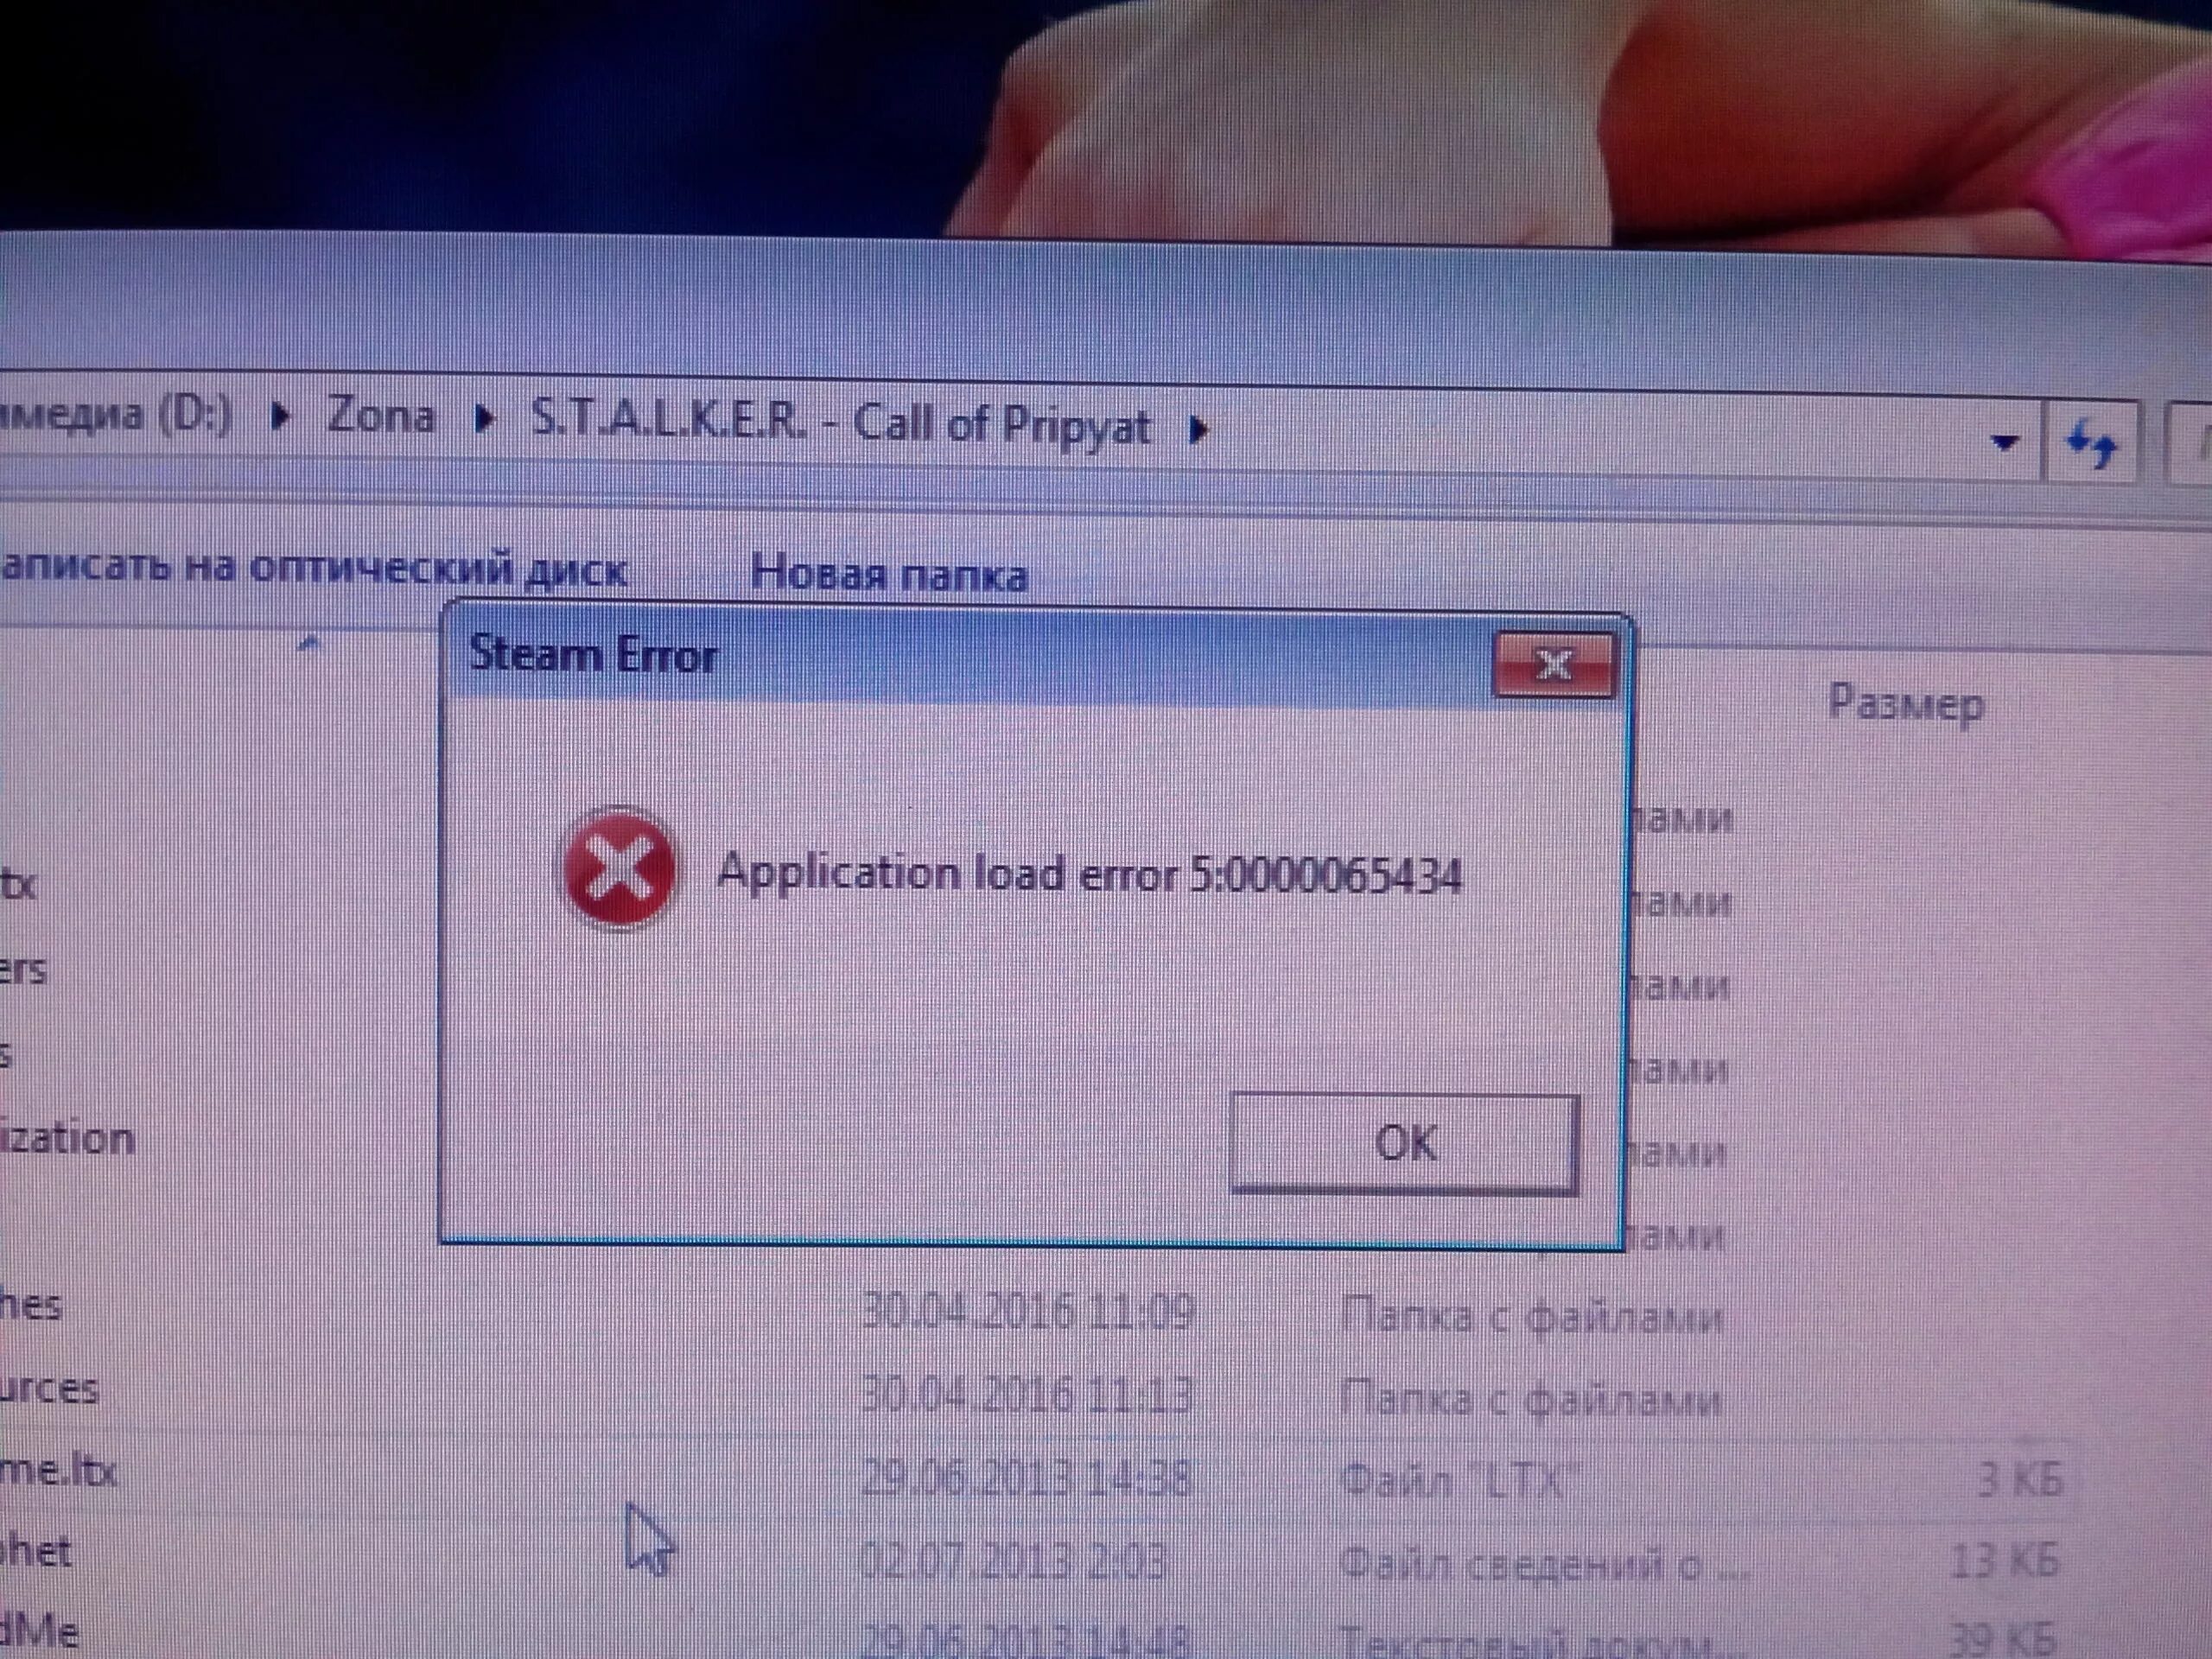 Load error 5 0000065434. Ошибка application load Error 5 0000065434. Ошибка при запуске 5 0000065434. Ошибка Error.load settings. Errors load settings.